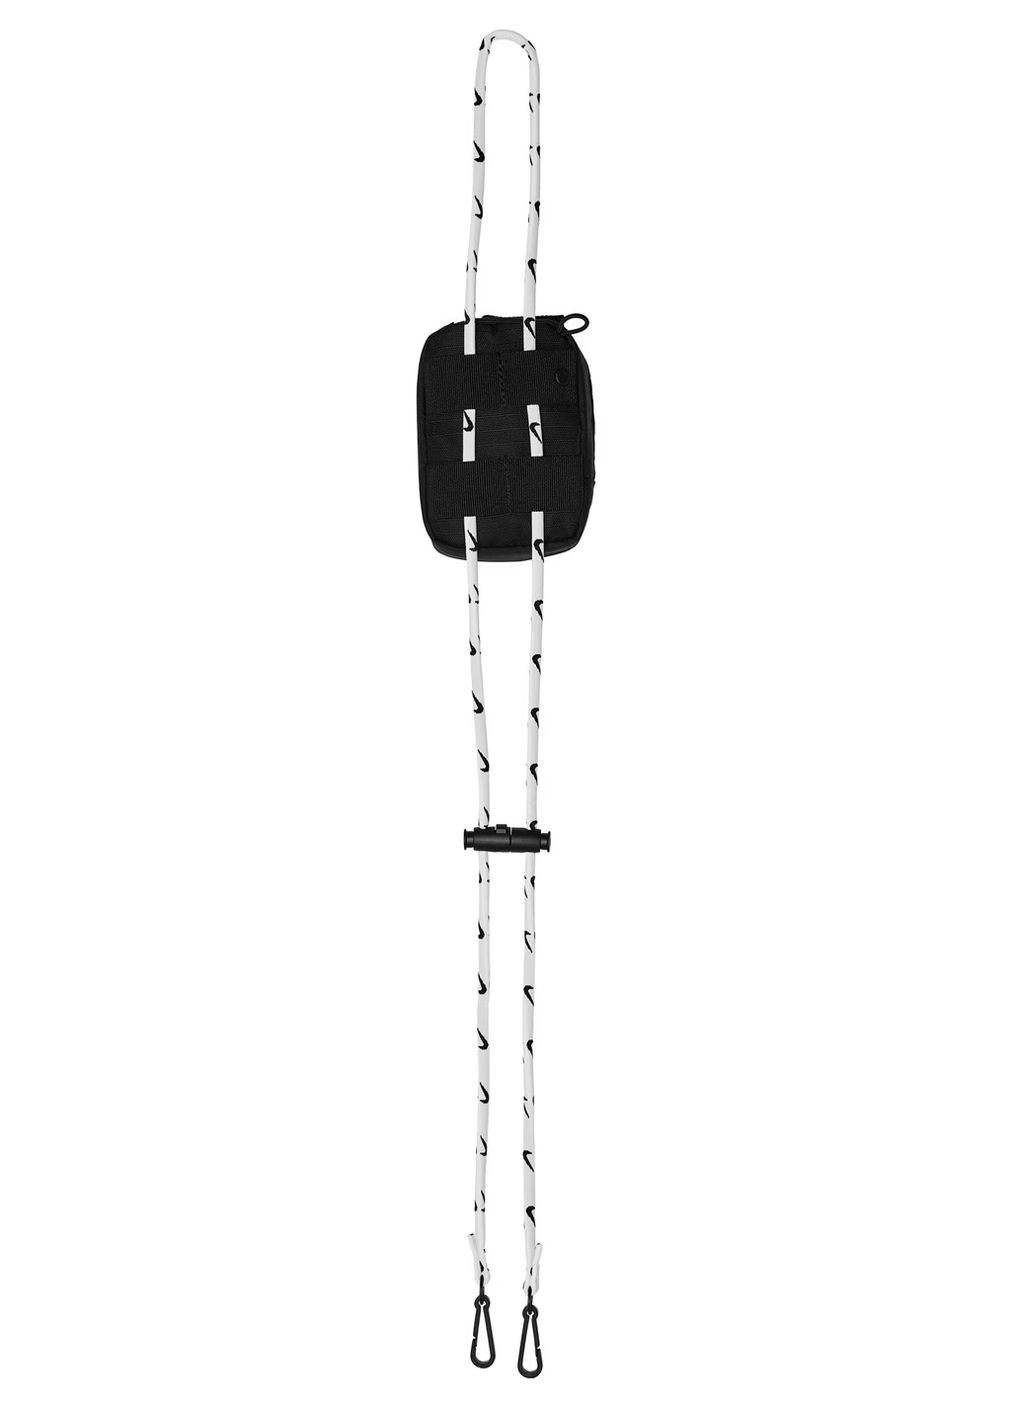 Маленька сумка ключниця Nike air lanyard small neck pouch black (270857173)